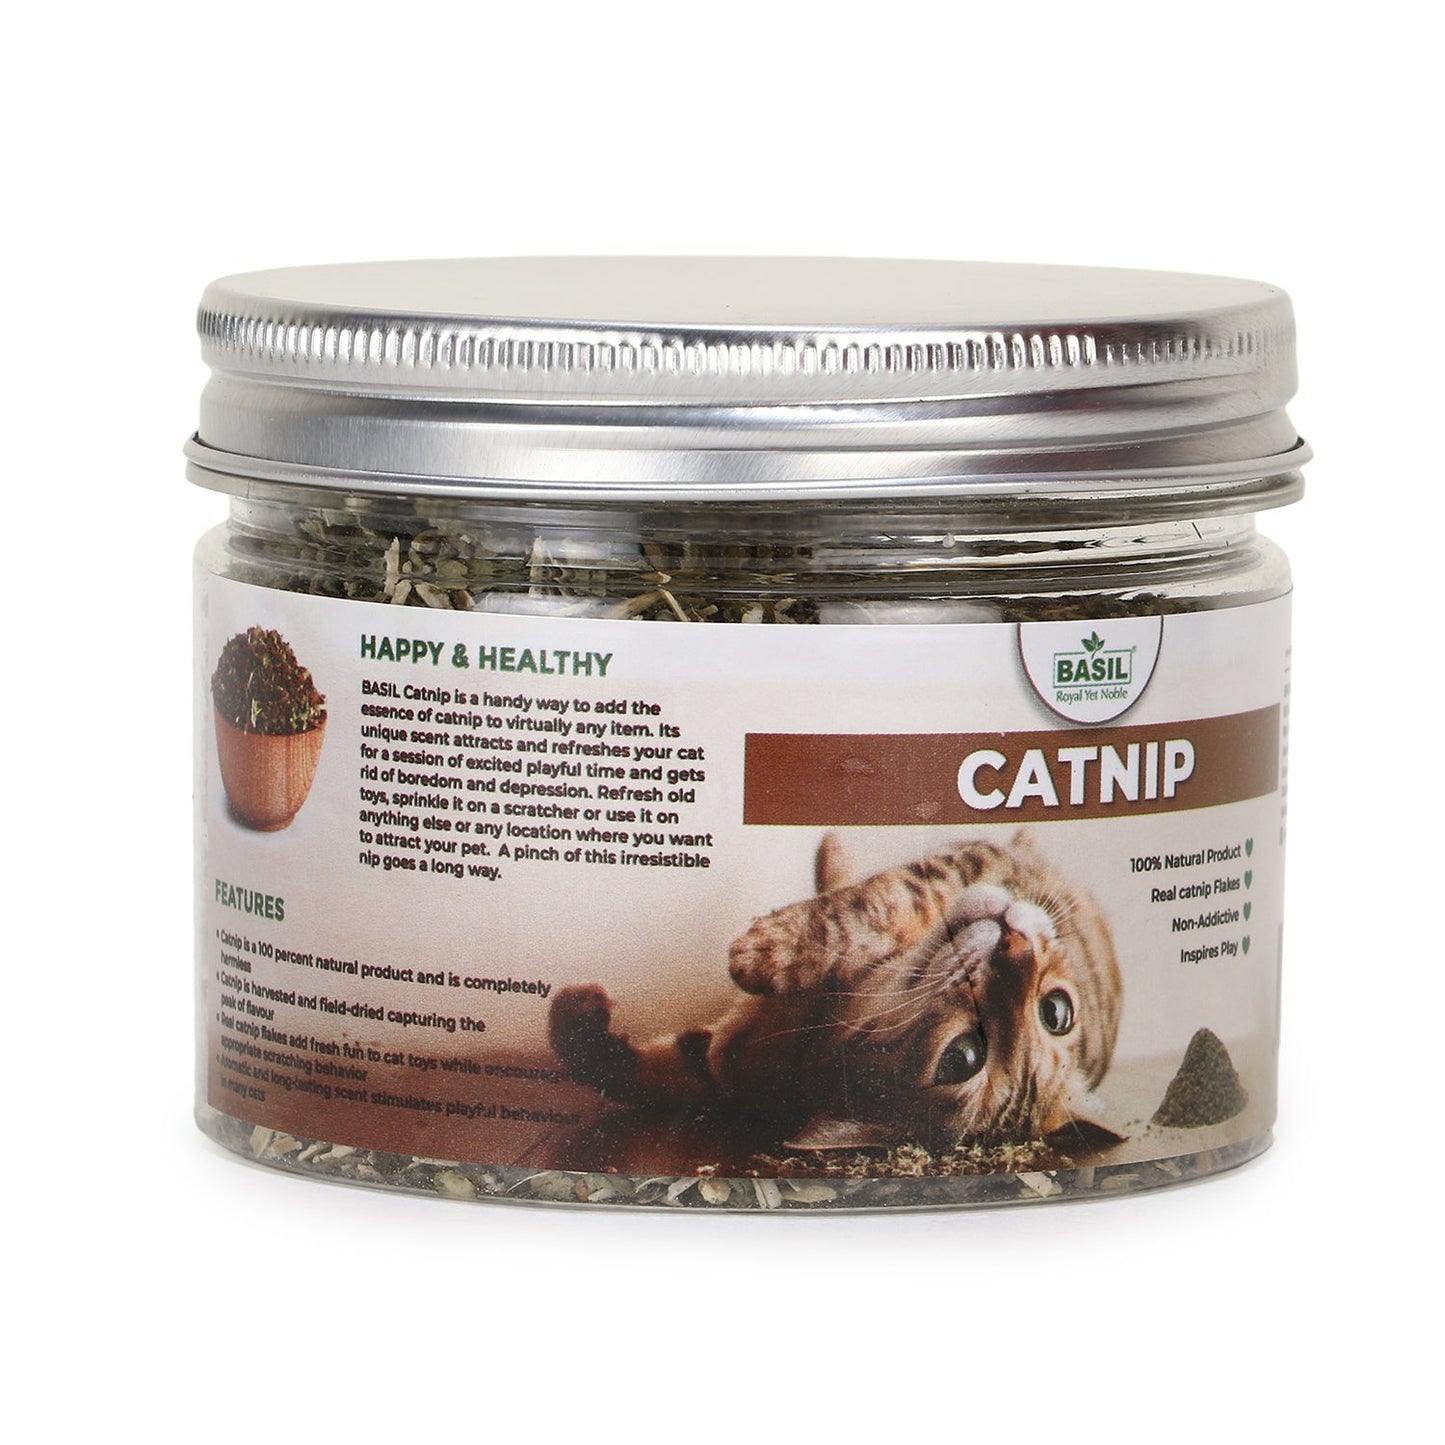 Basil Catnip Jar for Kittens & Cats, Pure & Natural Cat Nip